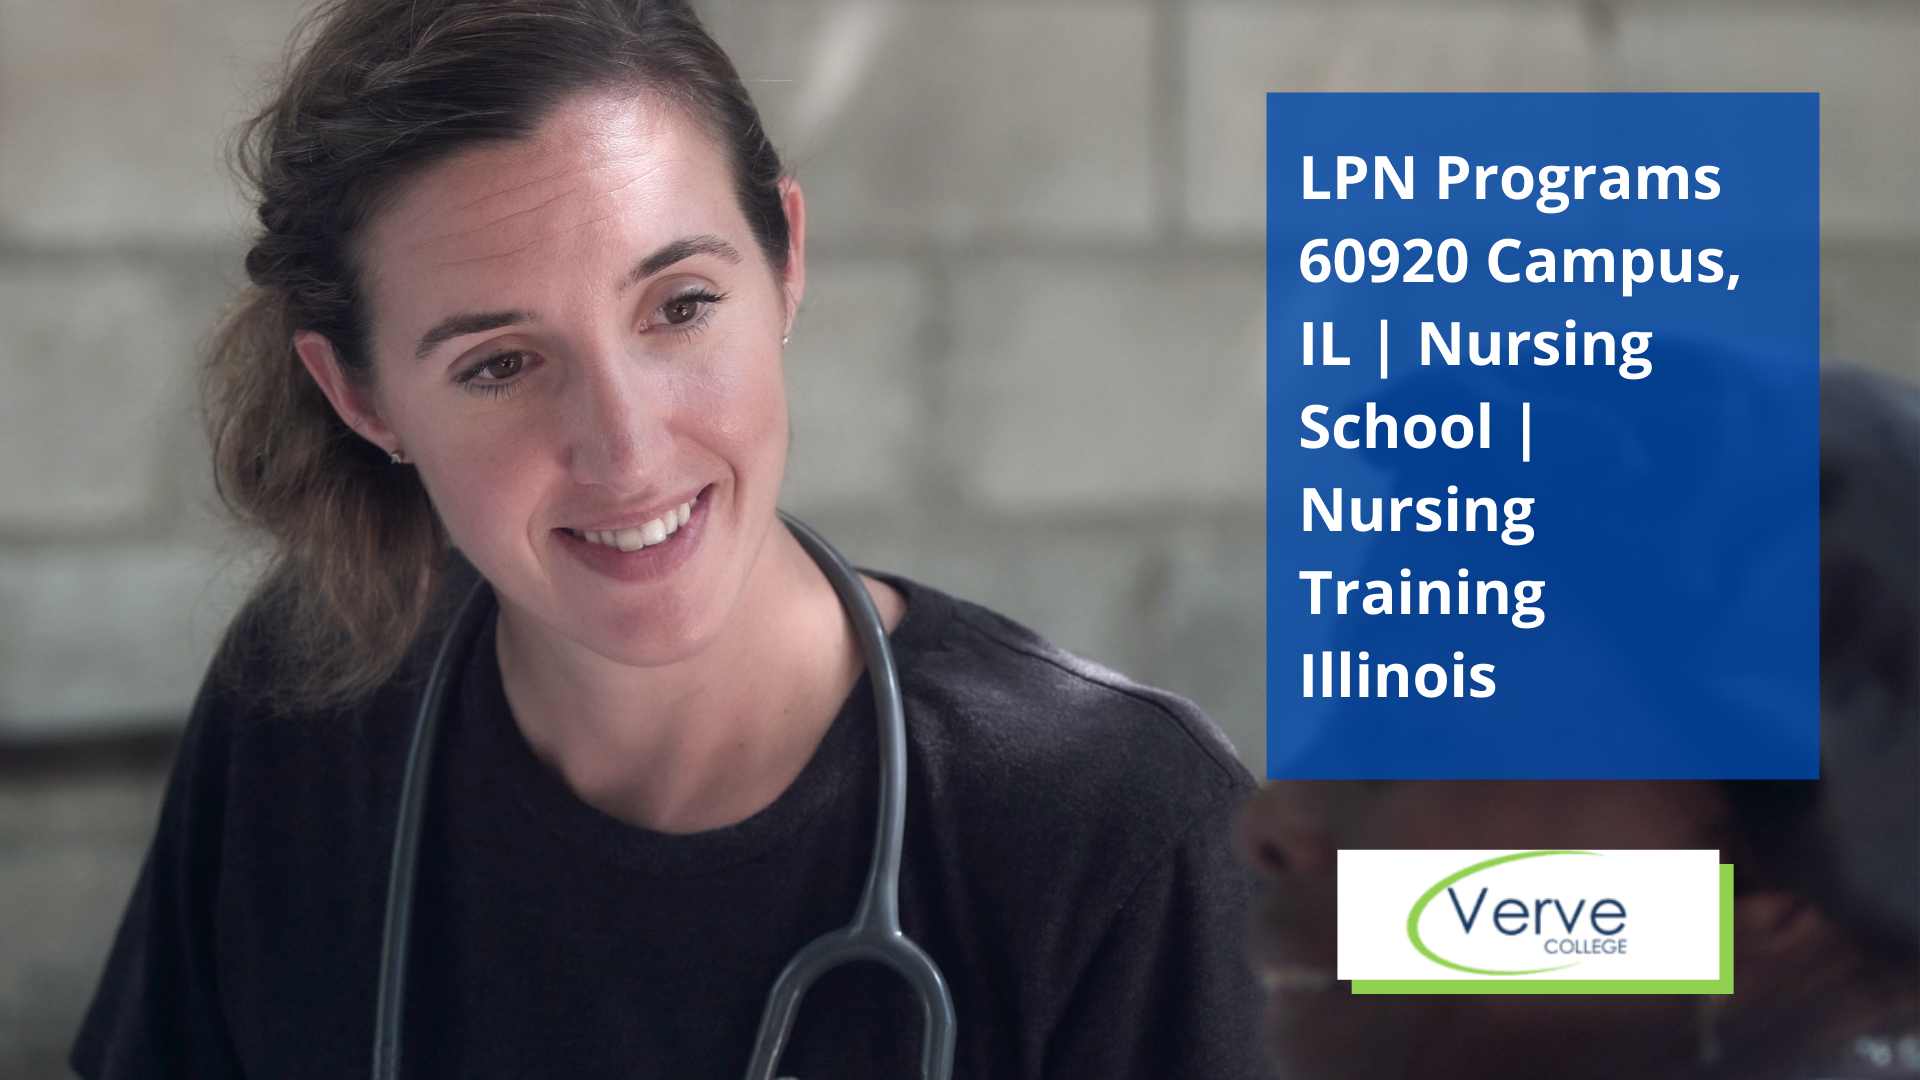 LPN Programs 60920 Campus, IL | Nursing School | Nursing Training Illinois